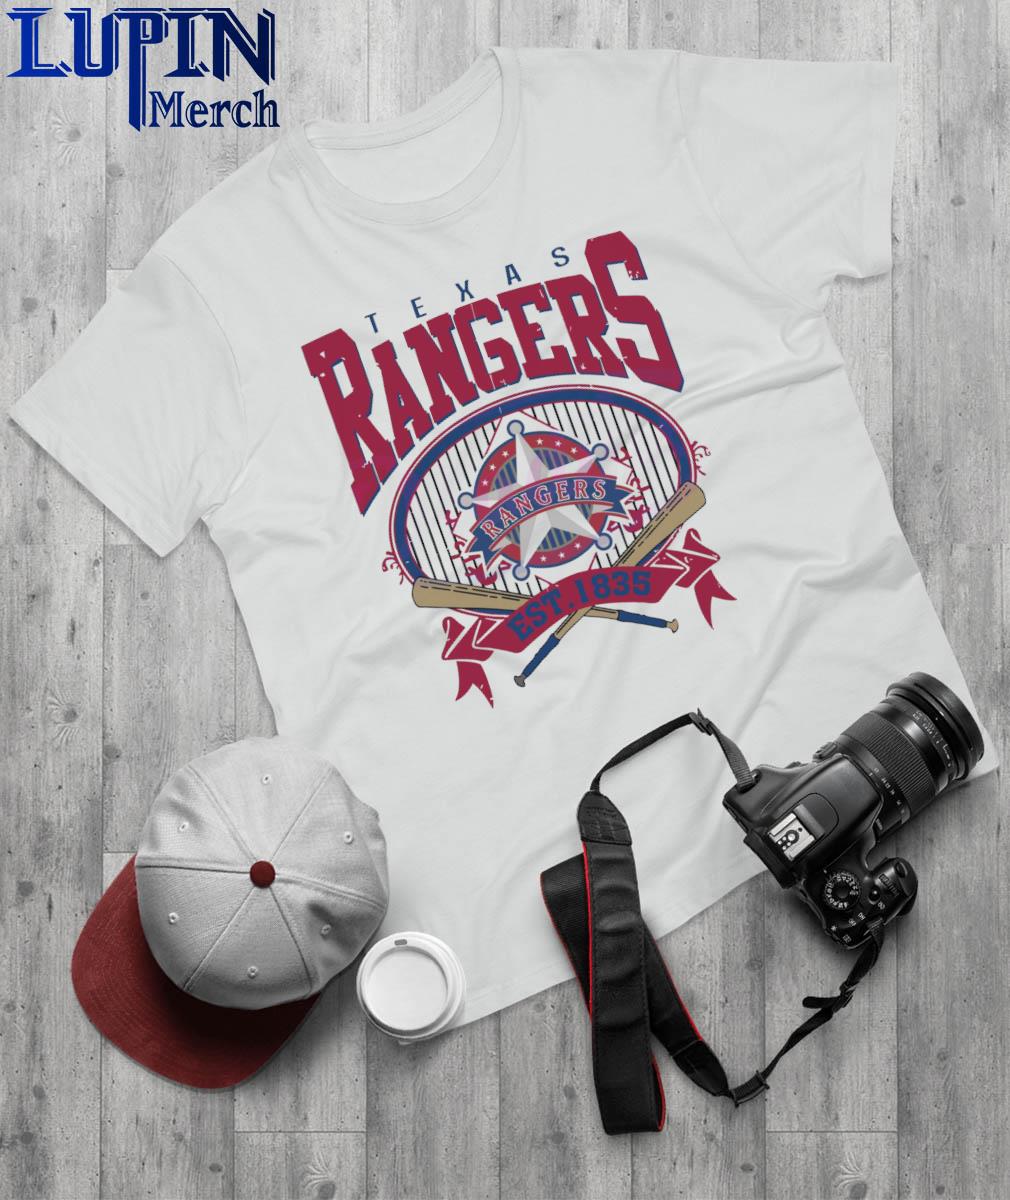 vintage Texas Rangers T shirt